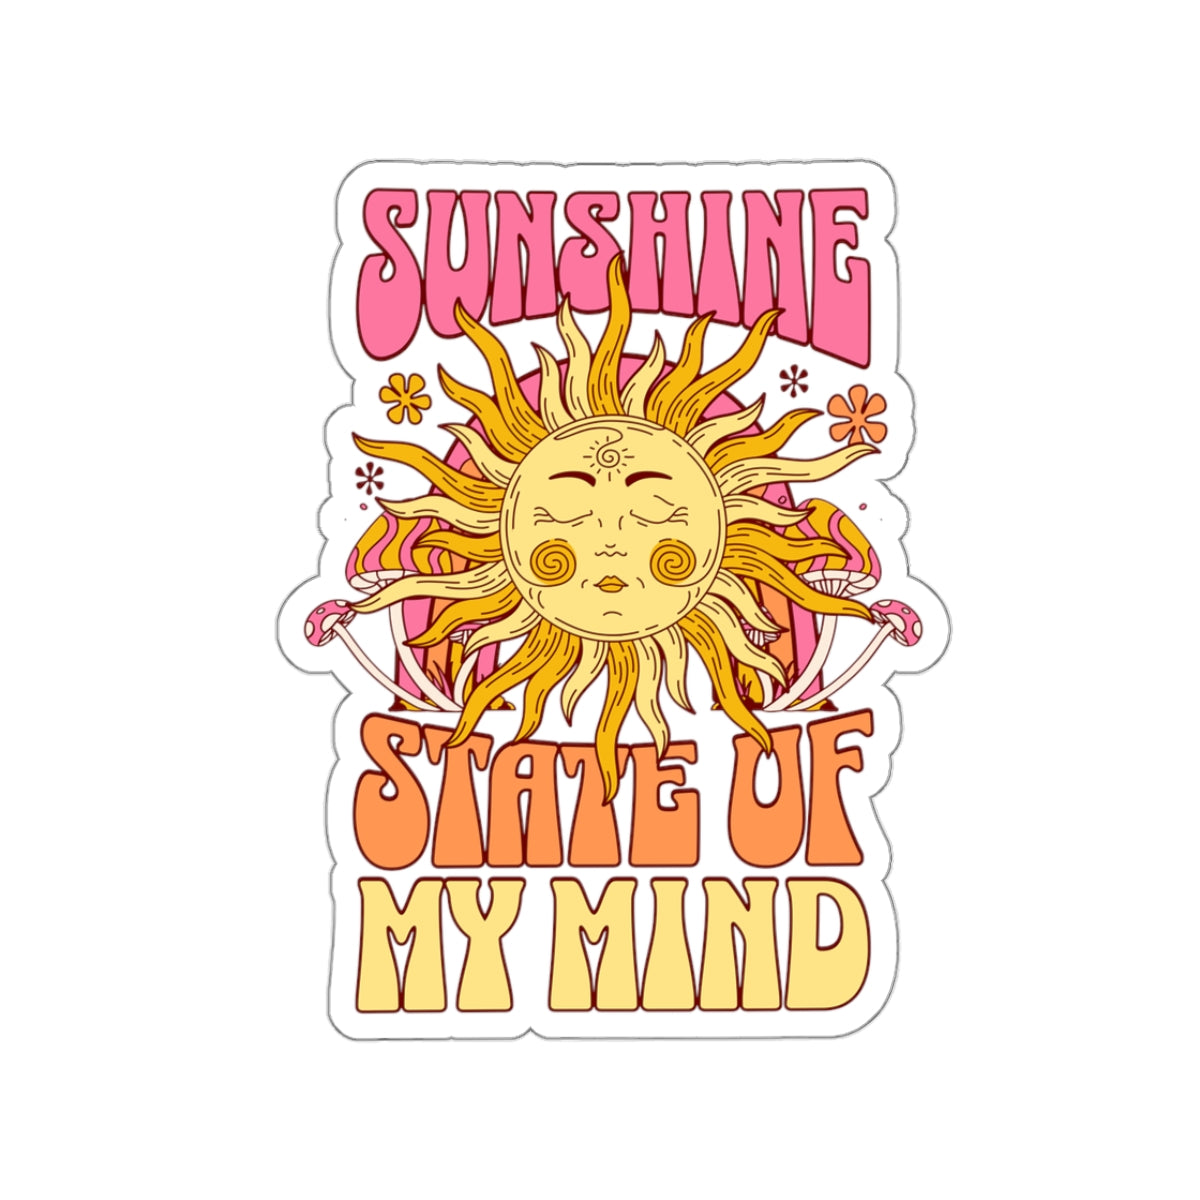 "Sunshine State Of Mind" Retro Groovy Sticker - Kiss-Cut Sticker